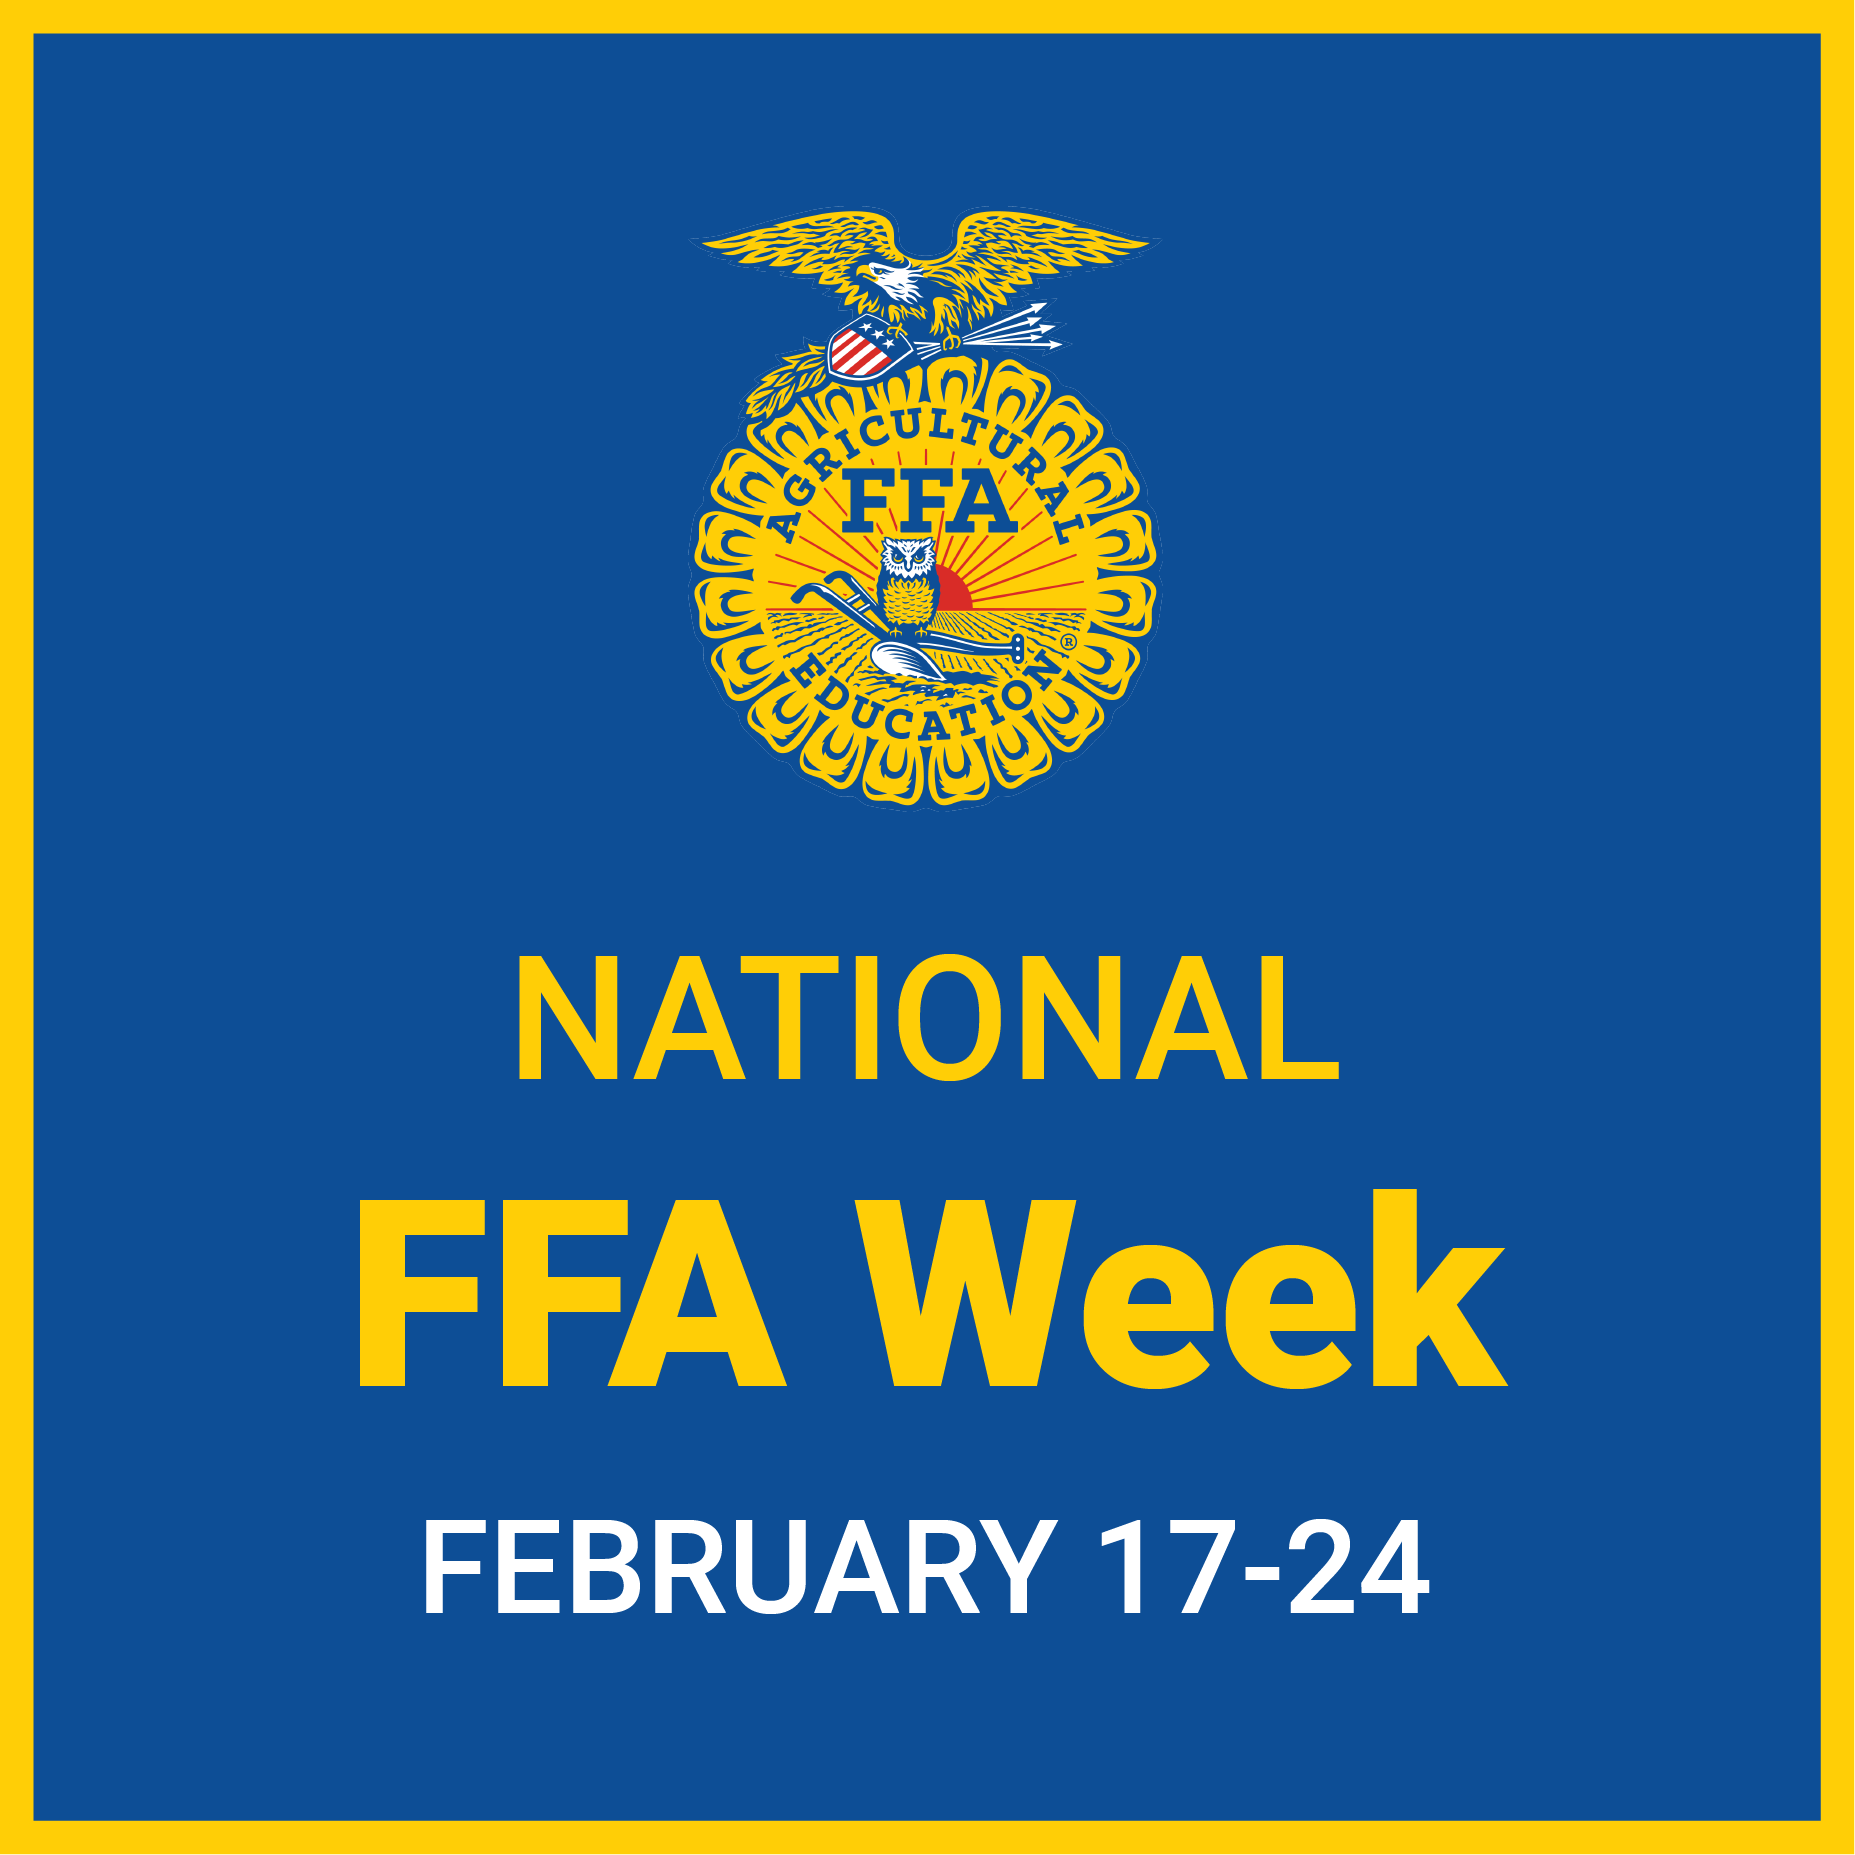 It’s National FFA Week! Patrick Windhorst